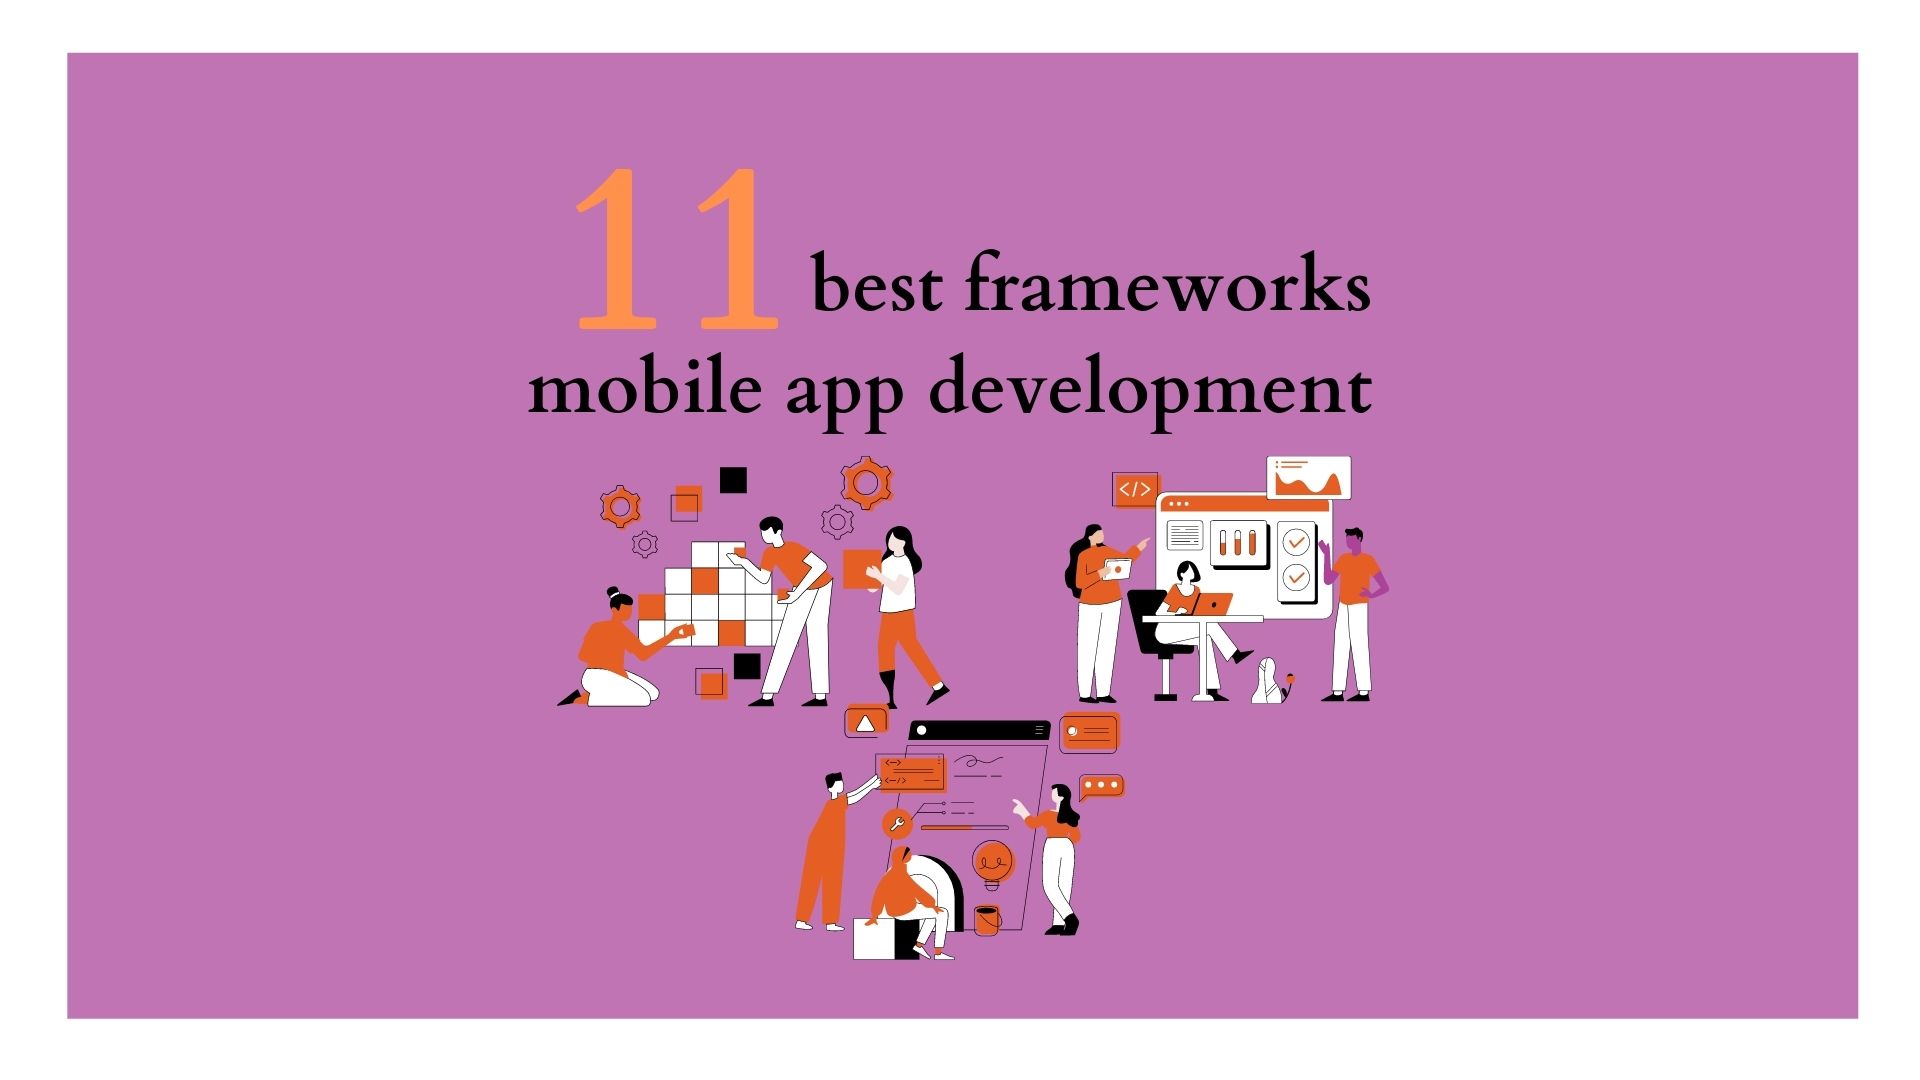 Know the 11 best frameworks for mobile app development